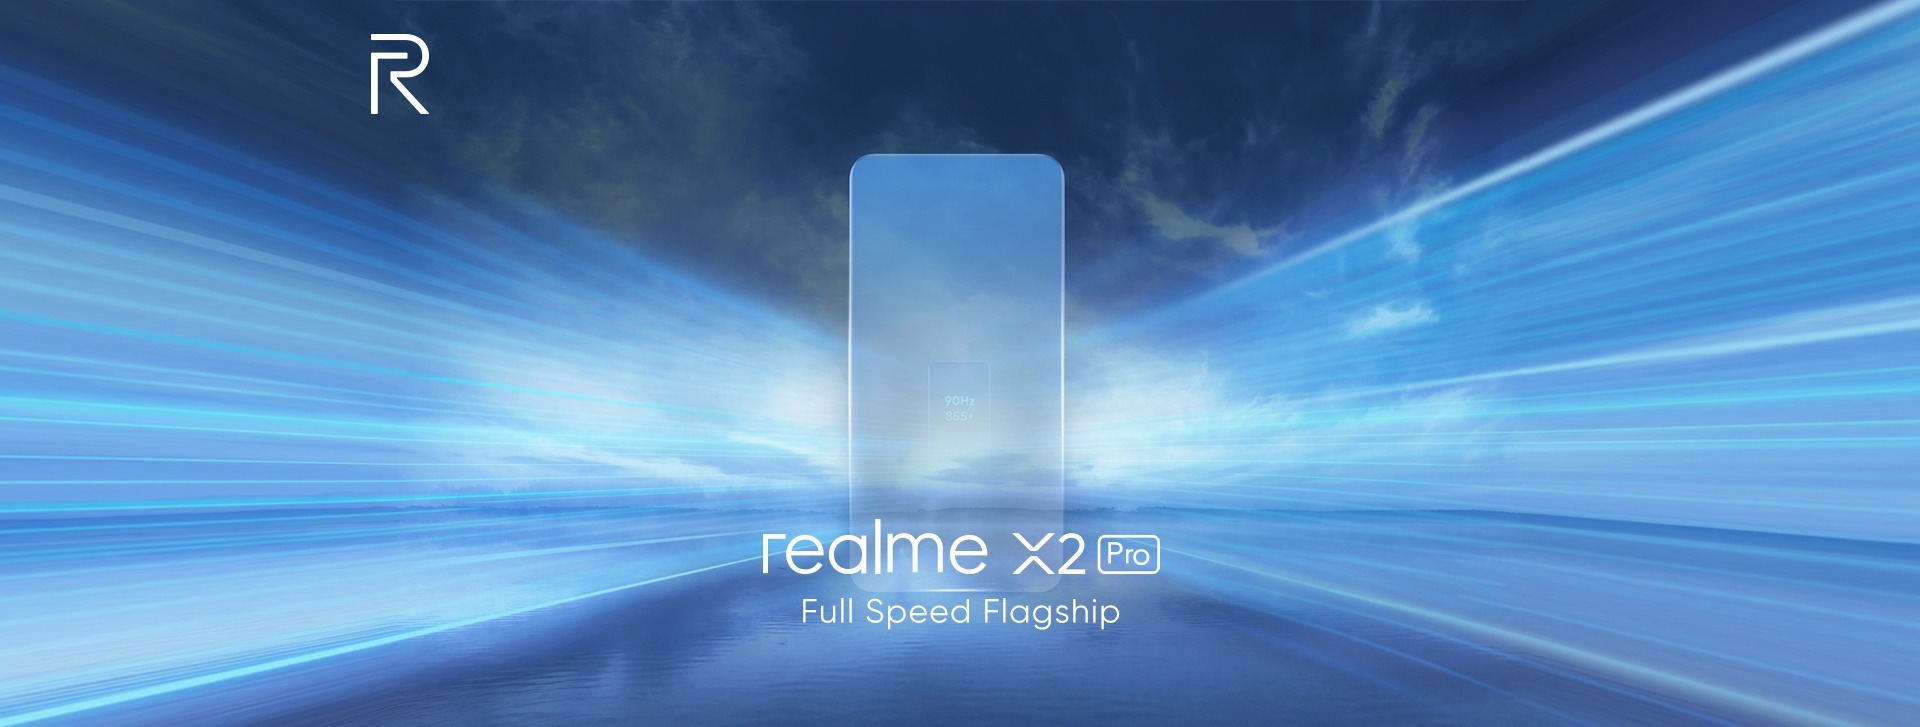 Realme-X2-Pro